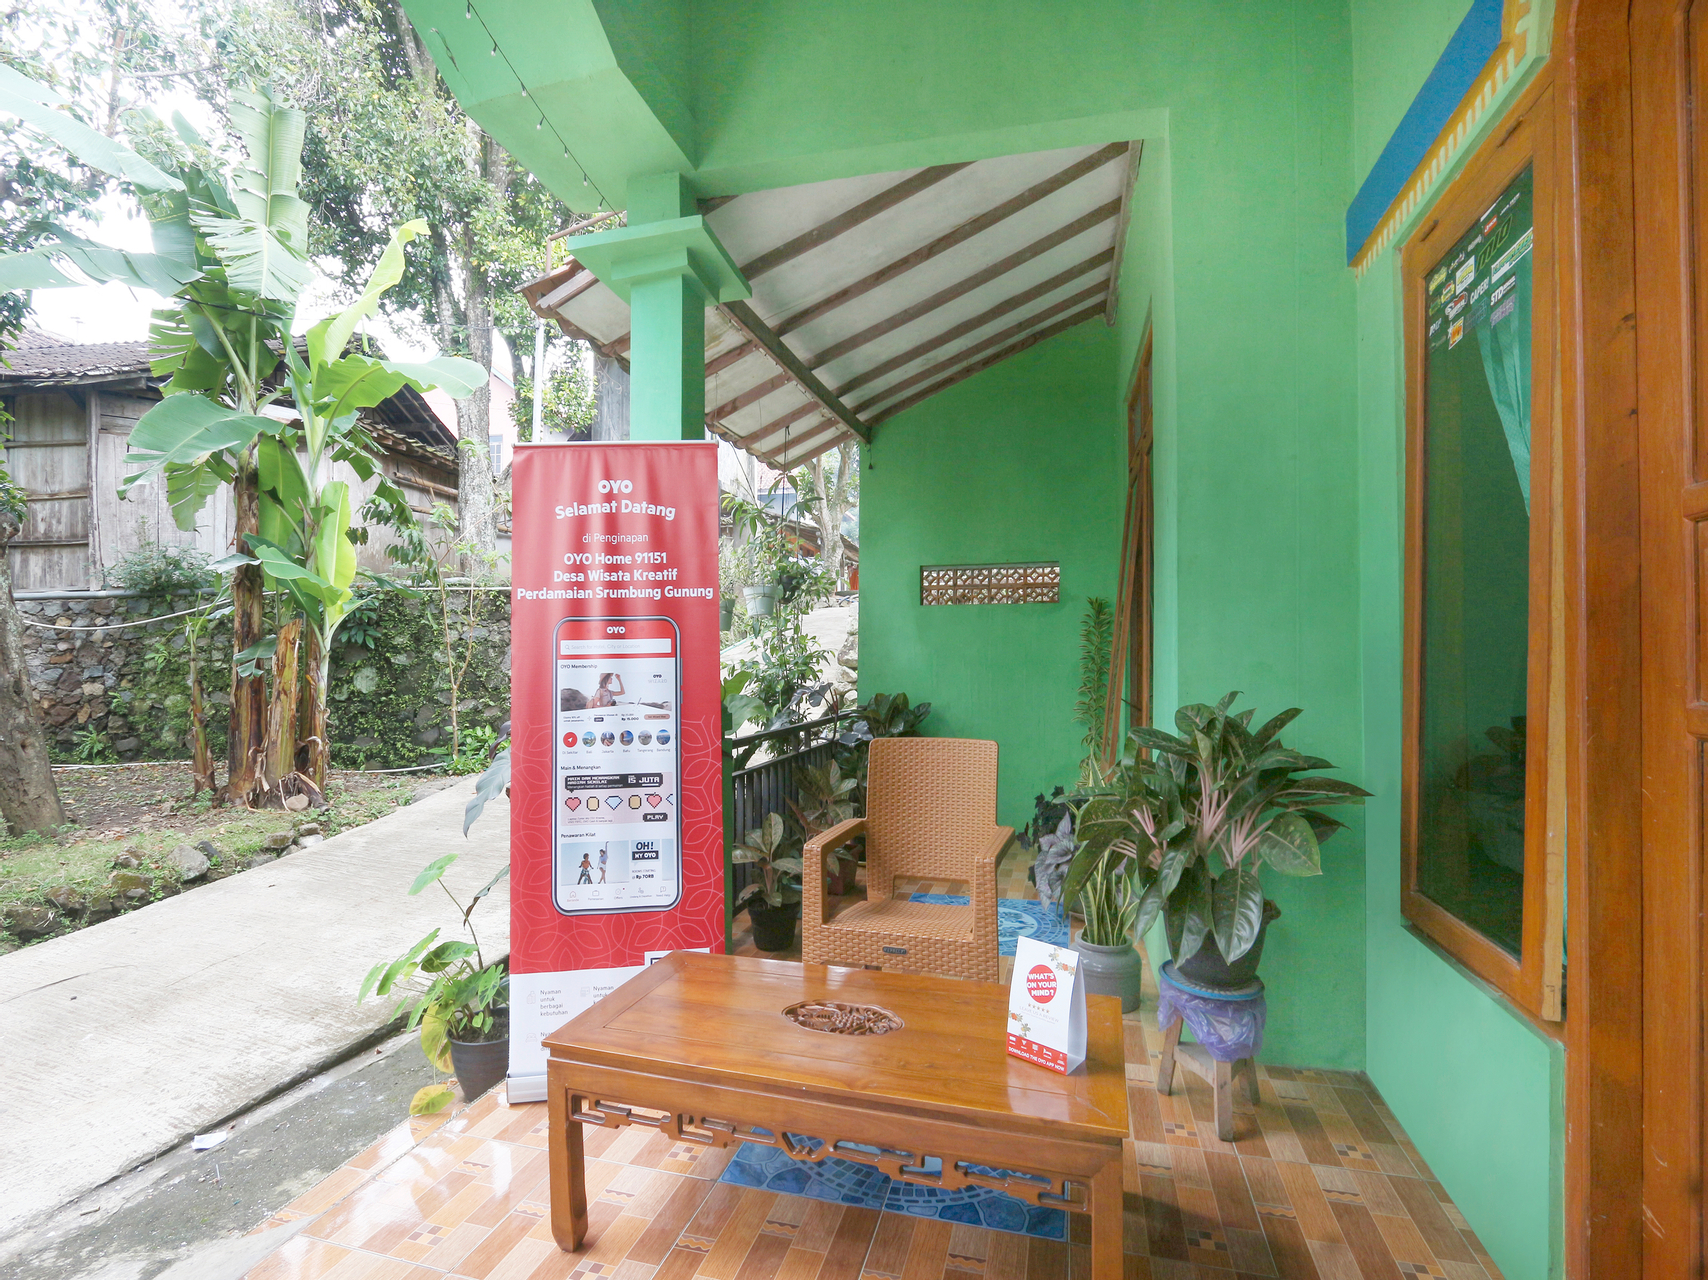 Others, OYO Homes 91151 Desa Wisata Kreatif Perdamaian Sru, Semarang